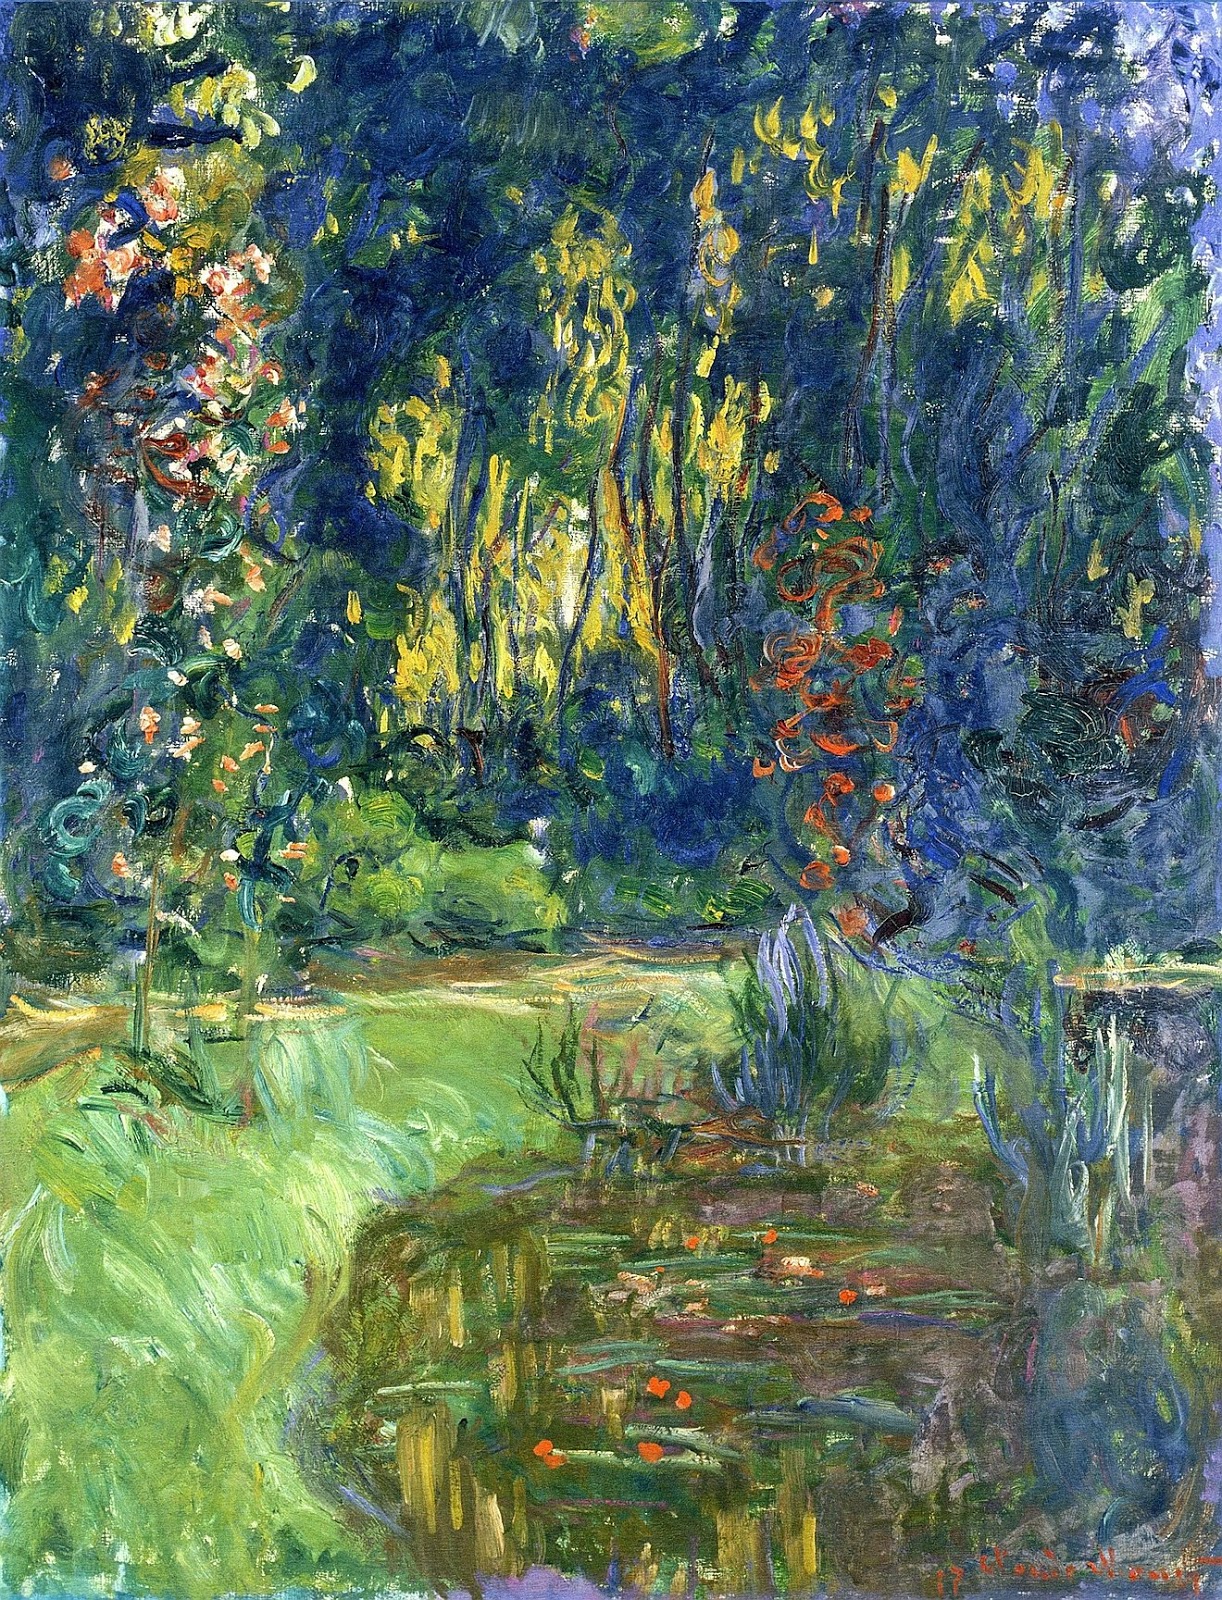 Claude+Monet-1840-1926 (918).jpg